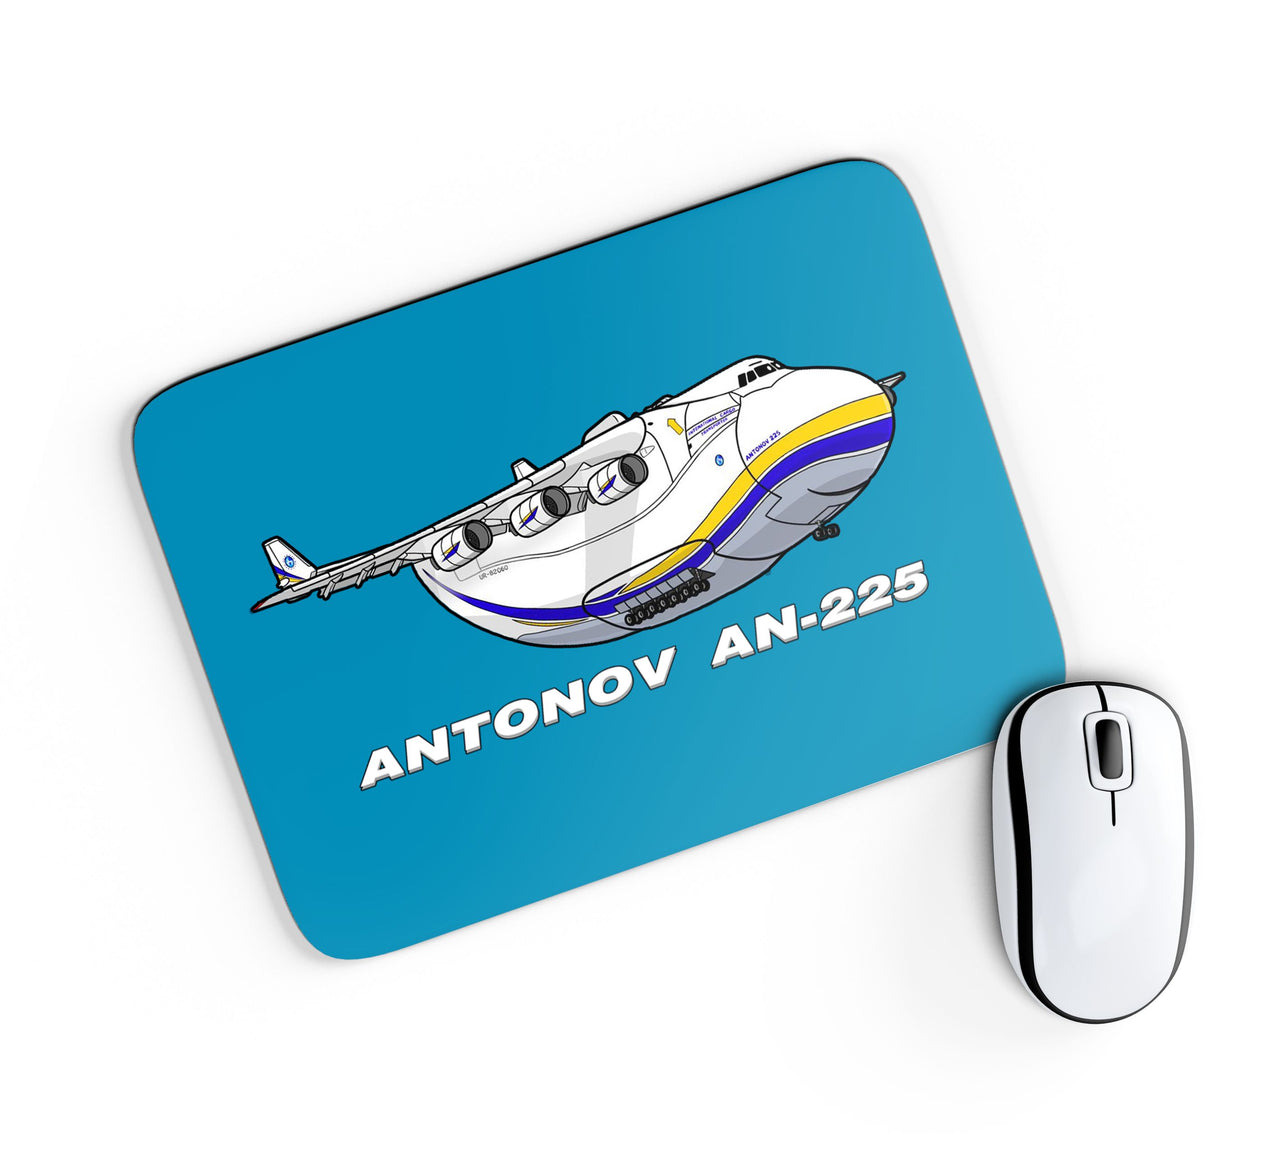 Antonov AN-225 (17) Designed Mouse Pads